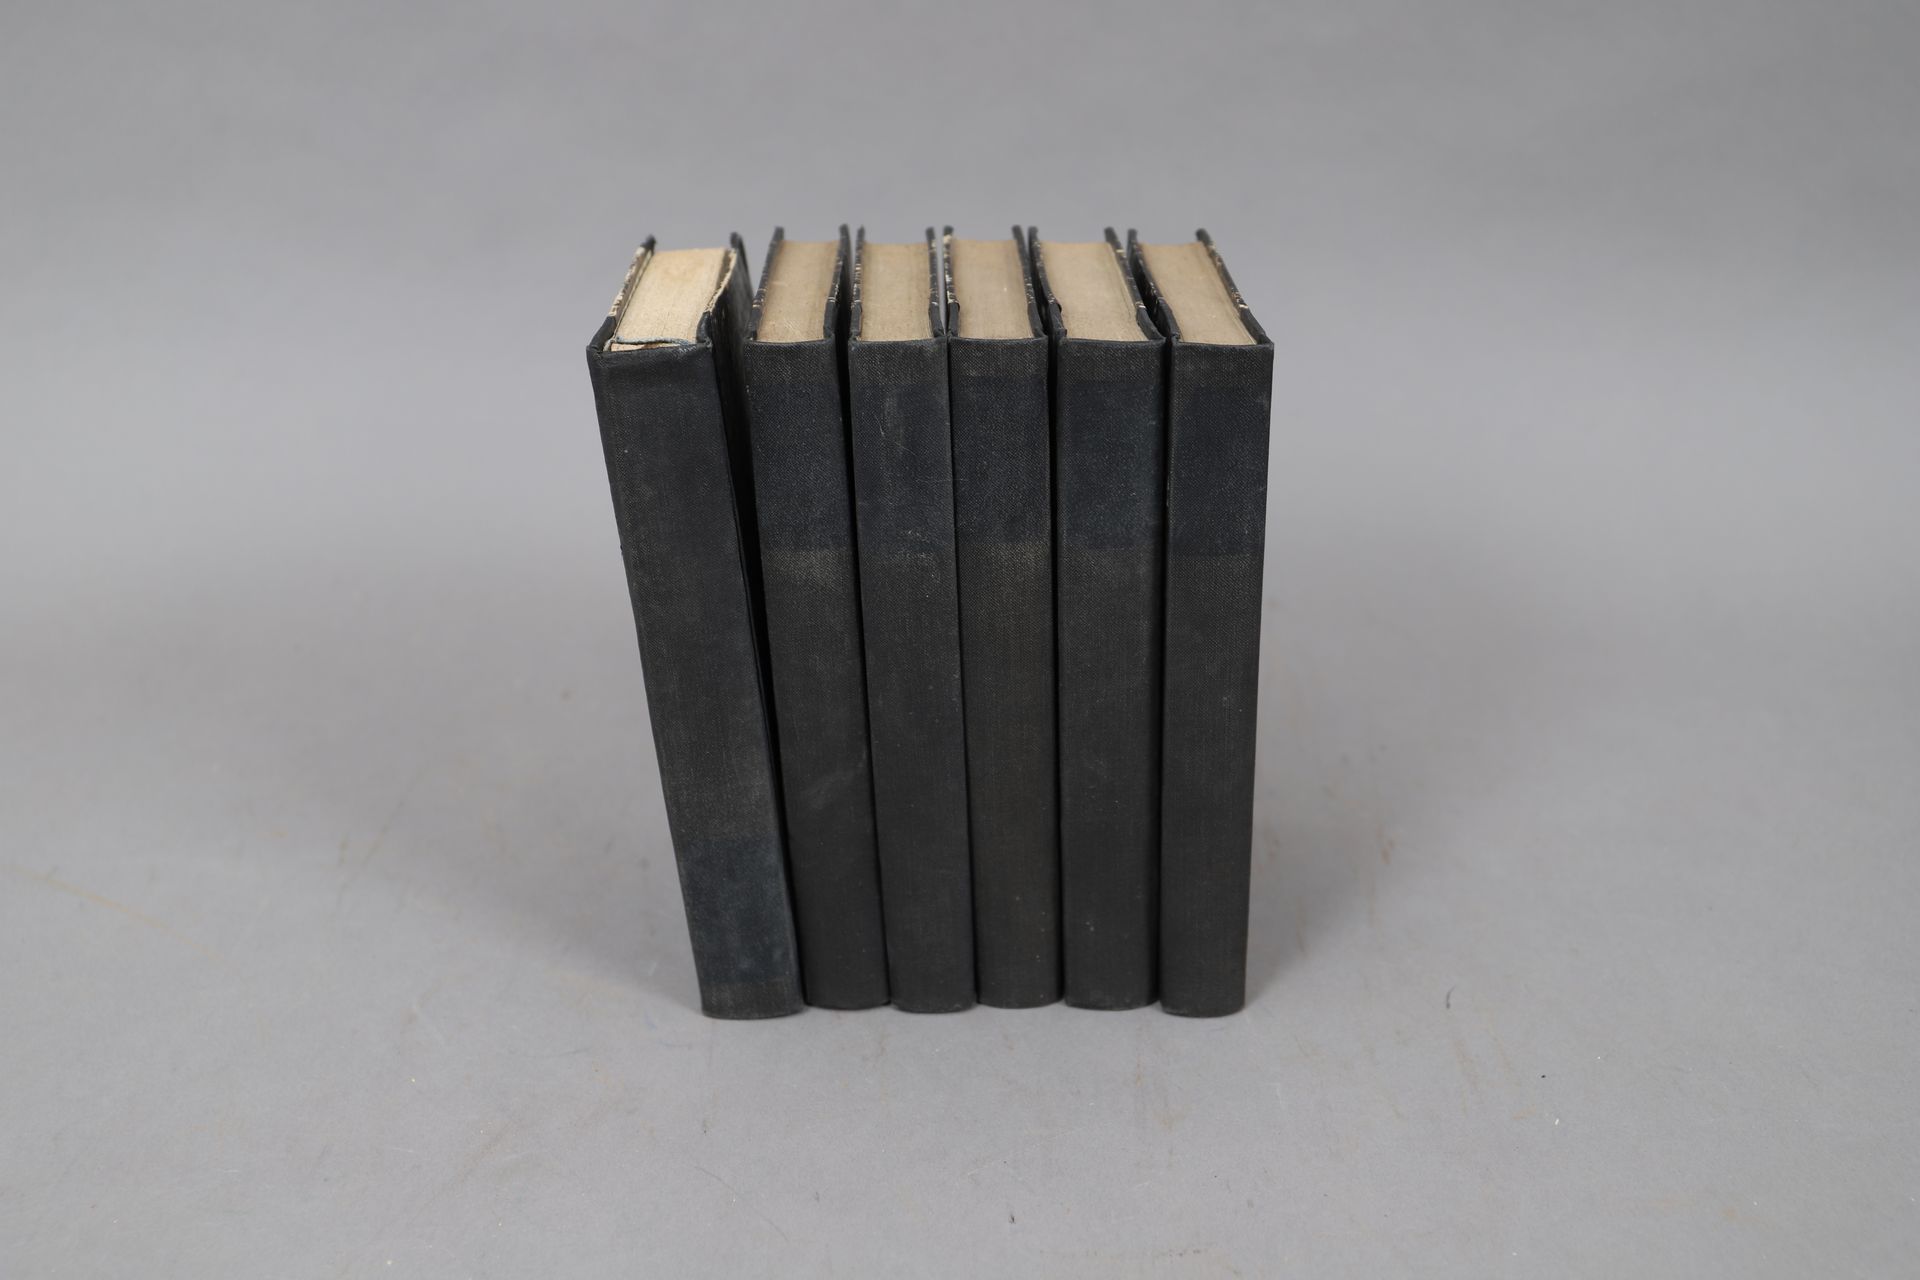 Null Works by BOSSUET

Bruselles 1818,

6 bound volumes.